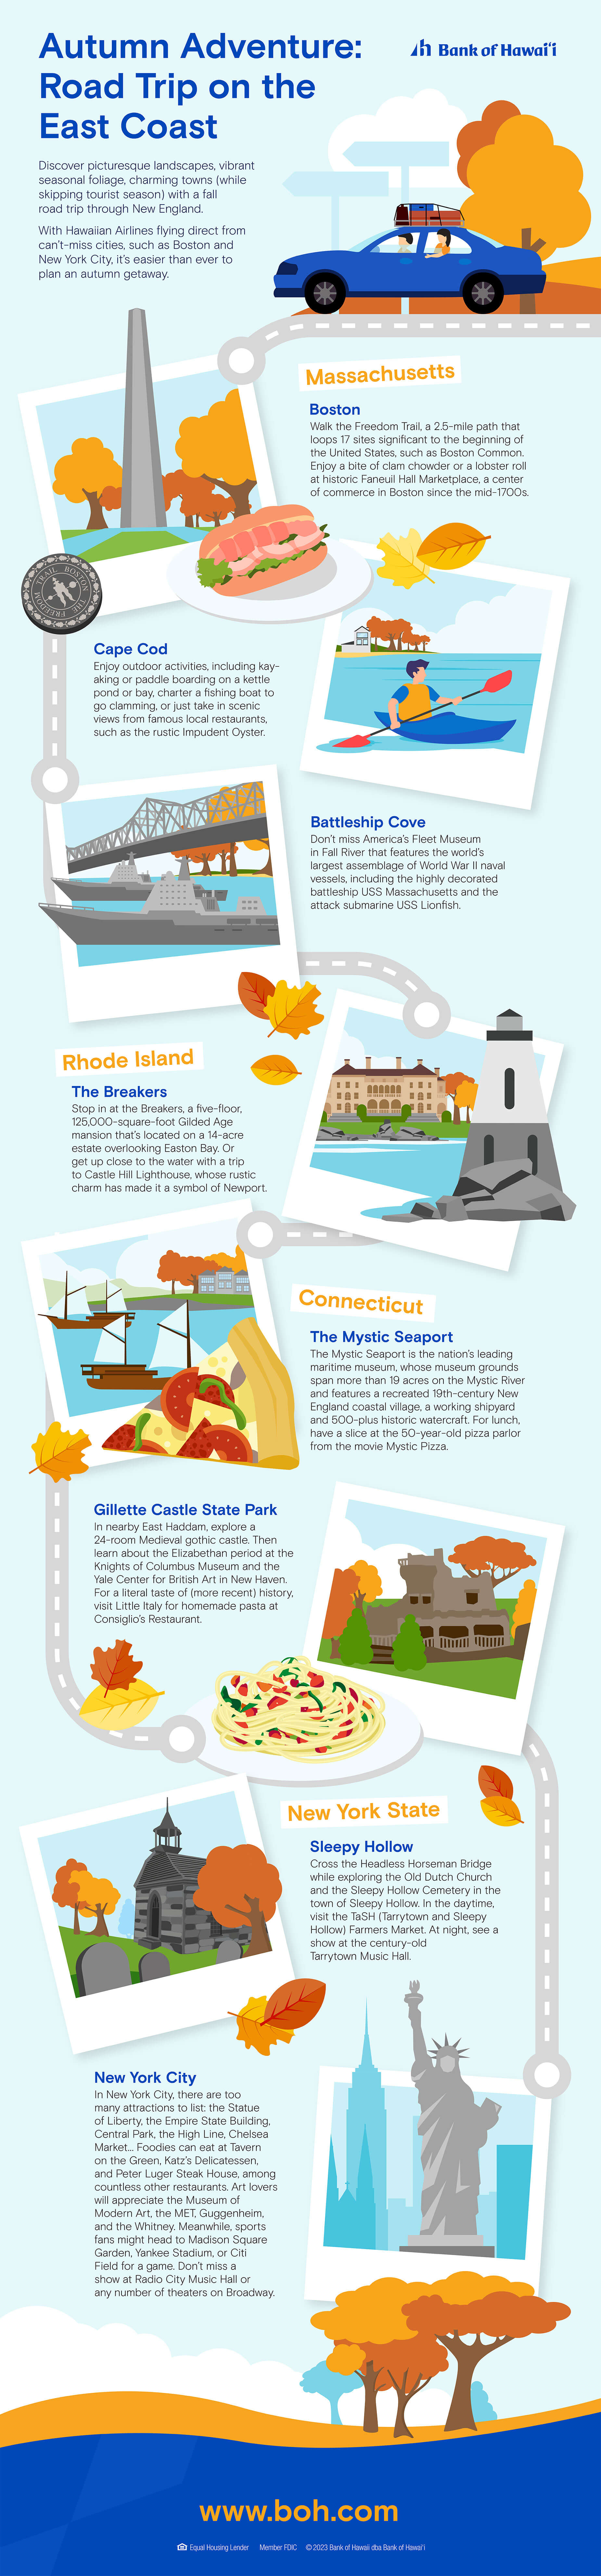 article-autumn-adventure-east-coast-infographic.jpg